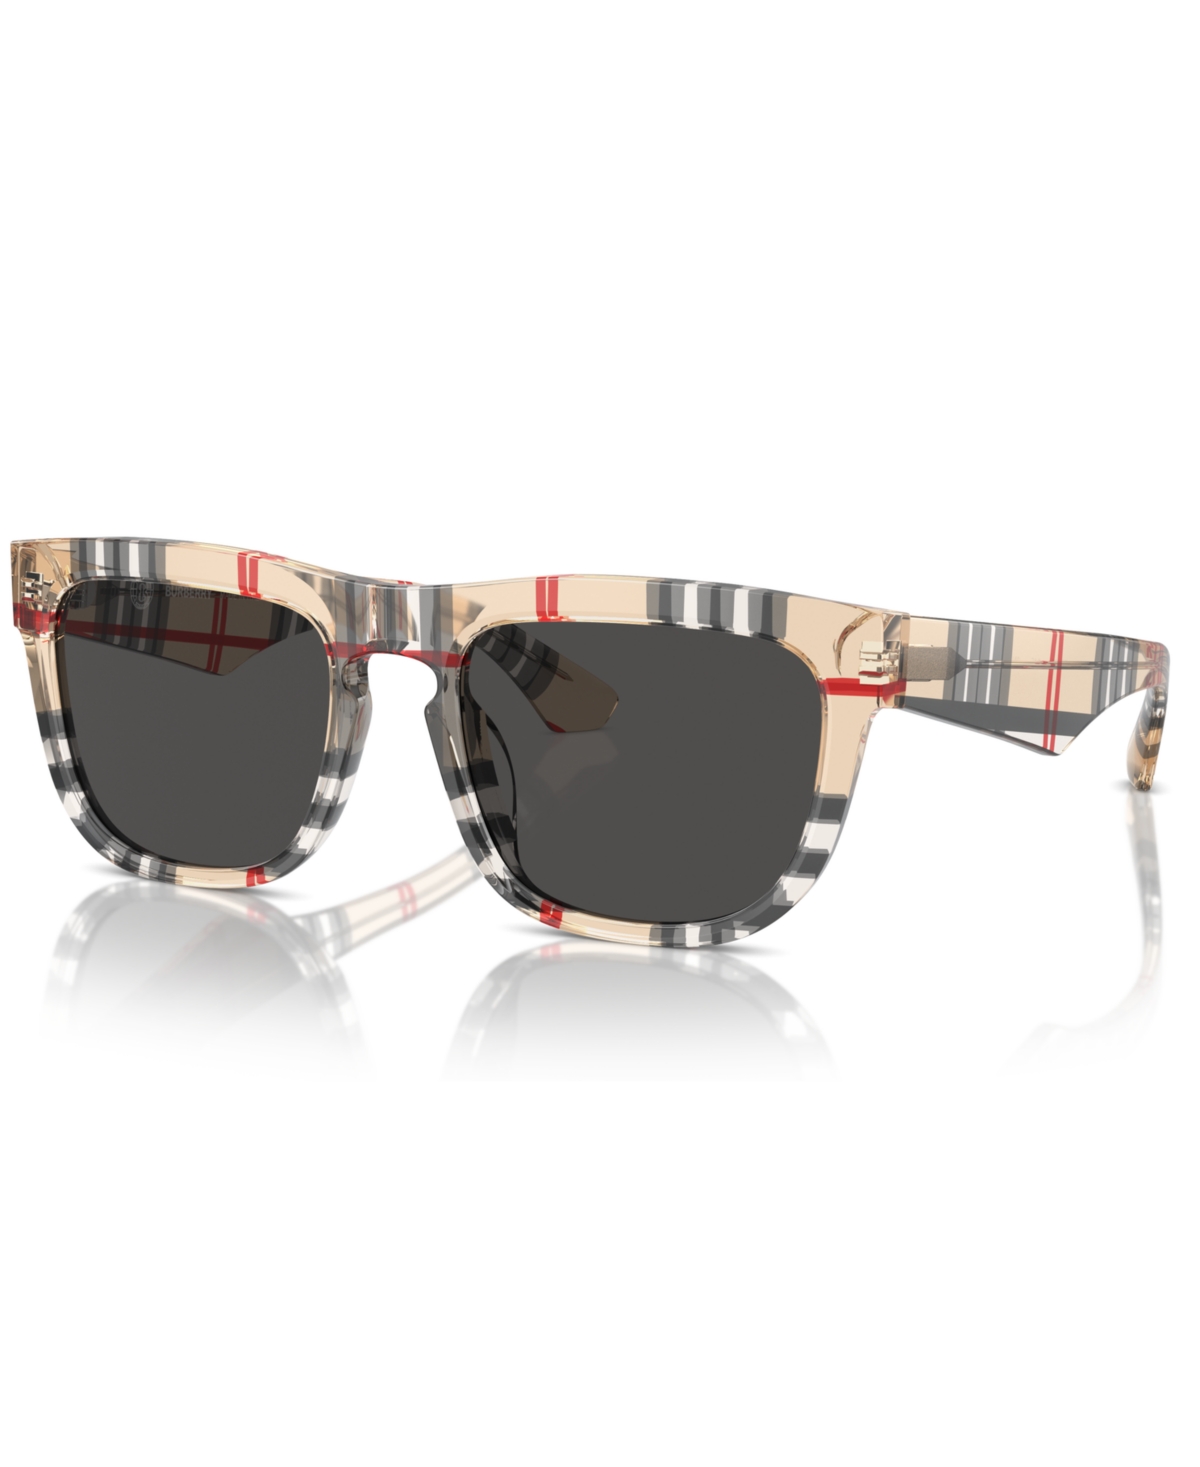 Men's Sunglasses, Be4431U - Vintage-Like Check